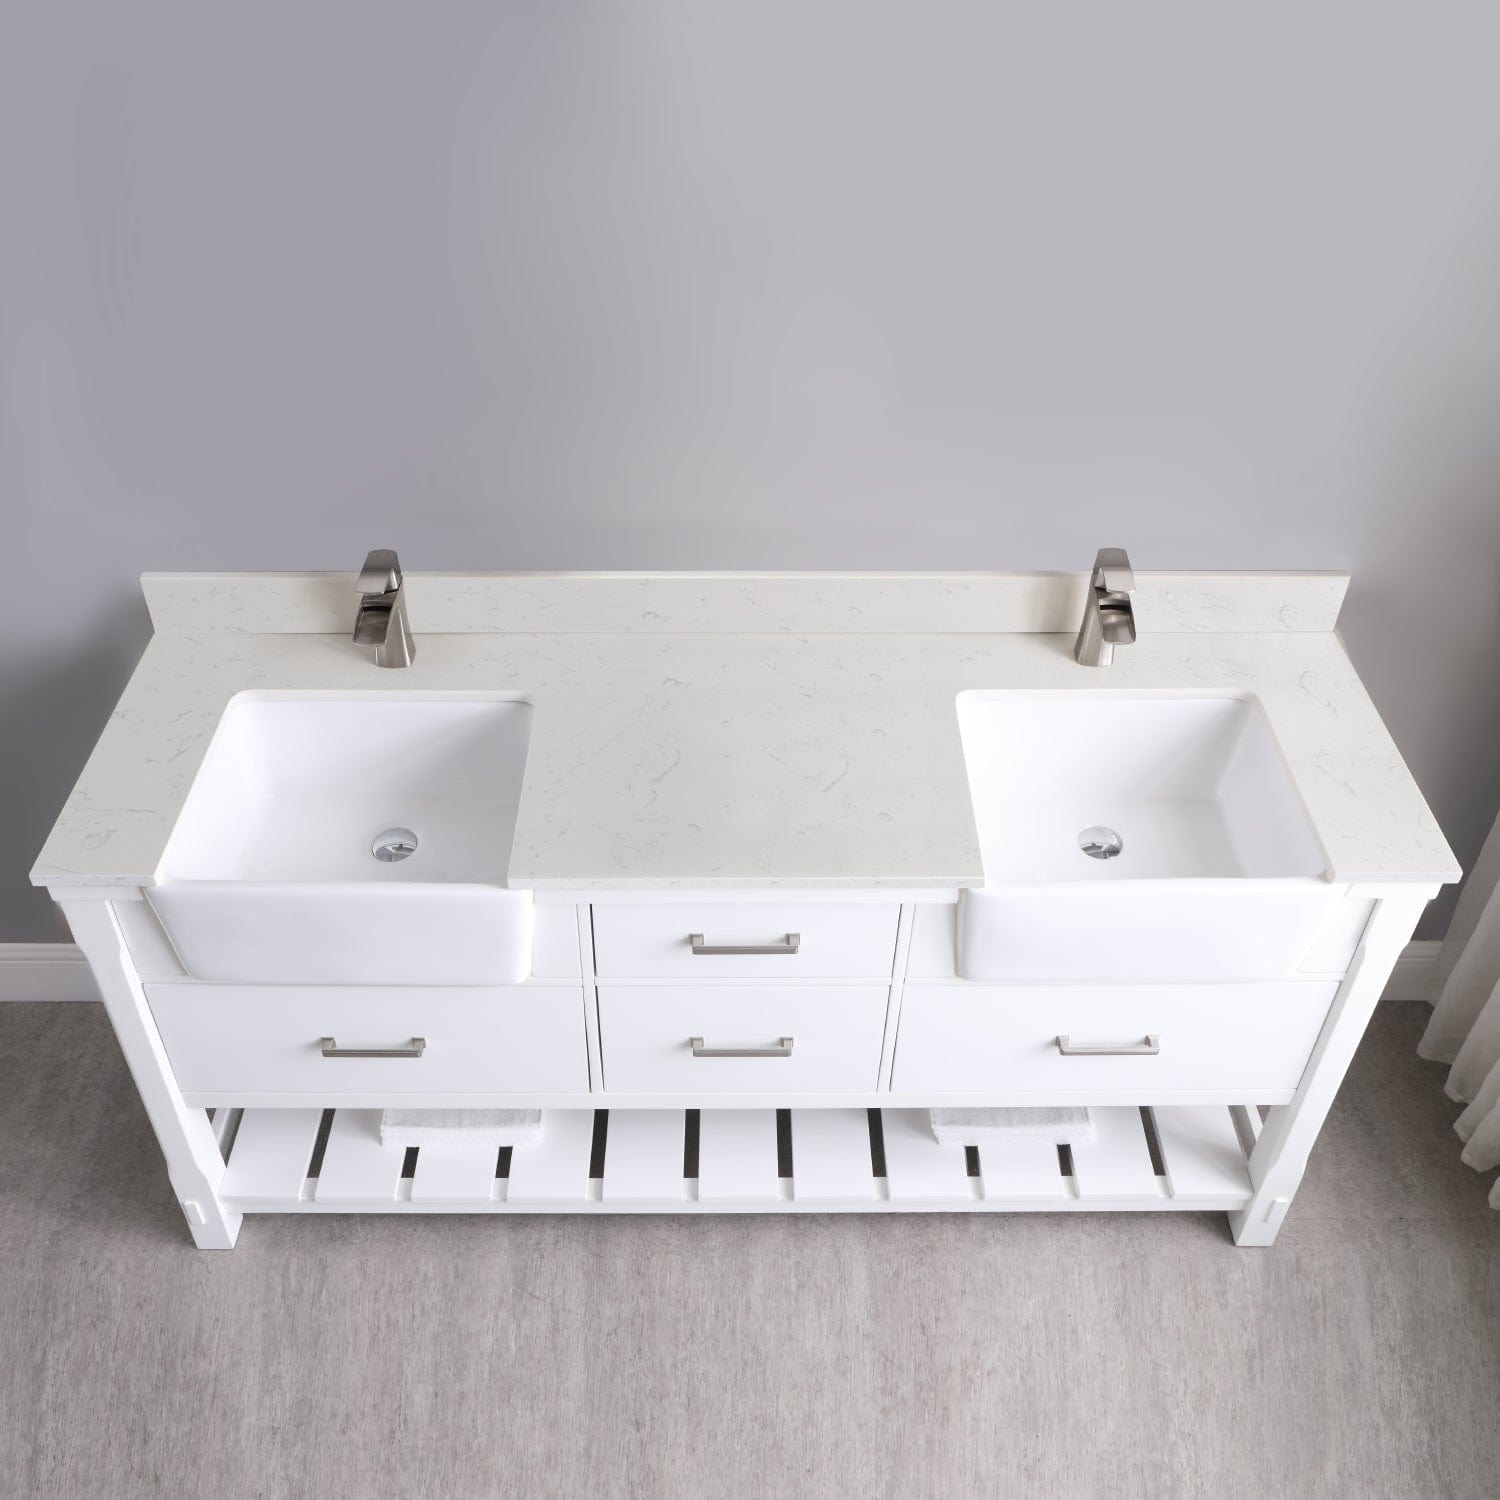 Altair Georgia 72" Double Bathroom Vanity Set in White and Composite Carrara White Stone Top with White Farmhouse Basin without Mirror 537072-WH-AW-NM - Molaix631112970709Vanity537072-WH-AW-NM